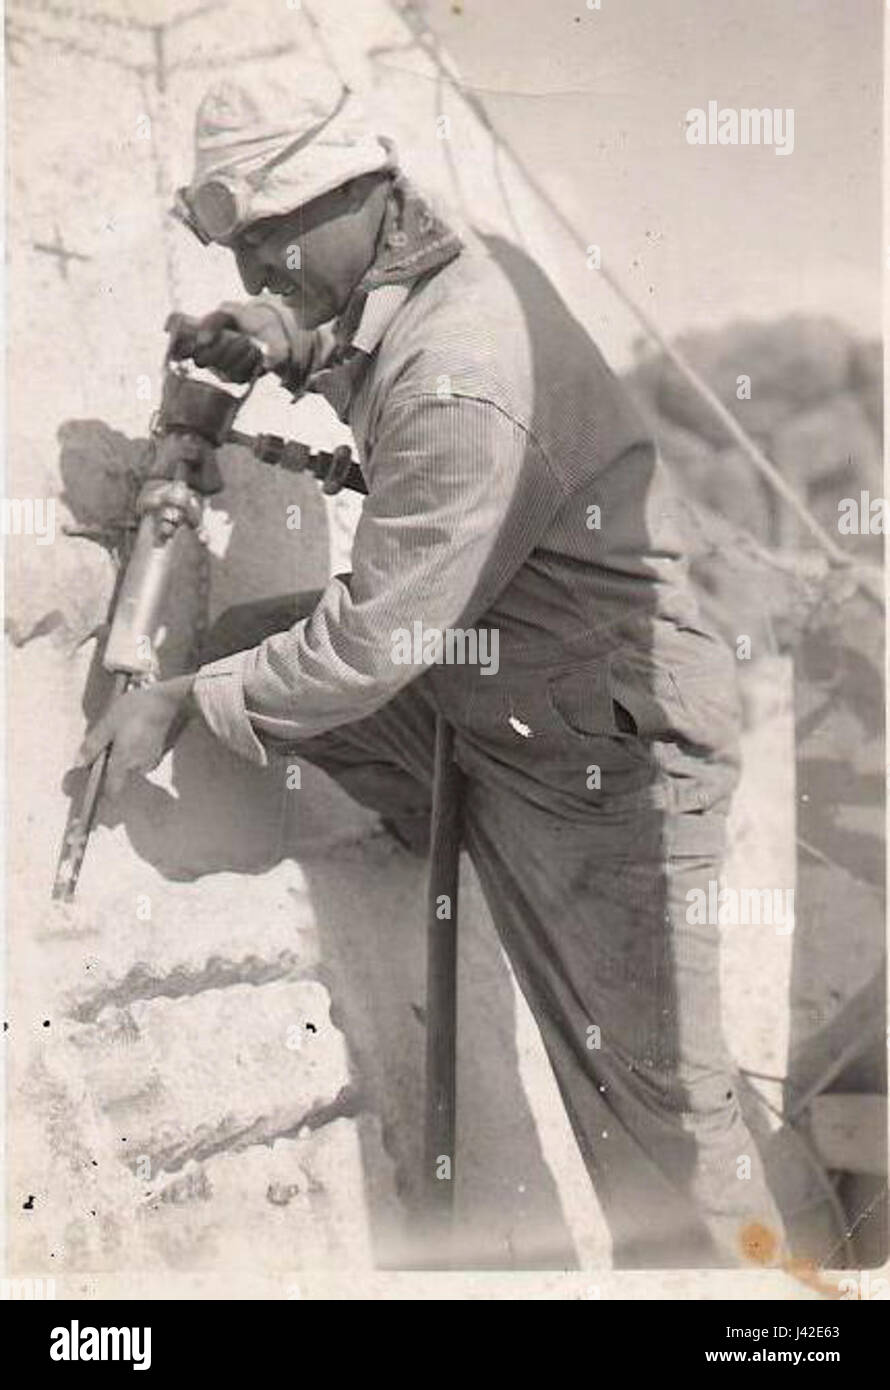 Luigi Del Bianco on Mount Rushmore Stock Photo